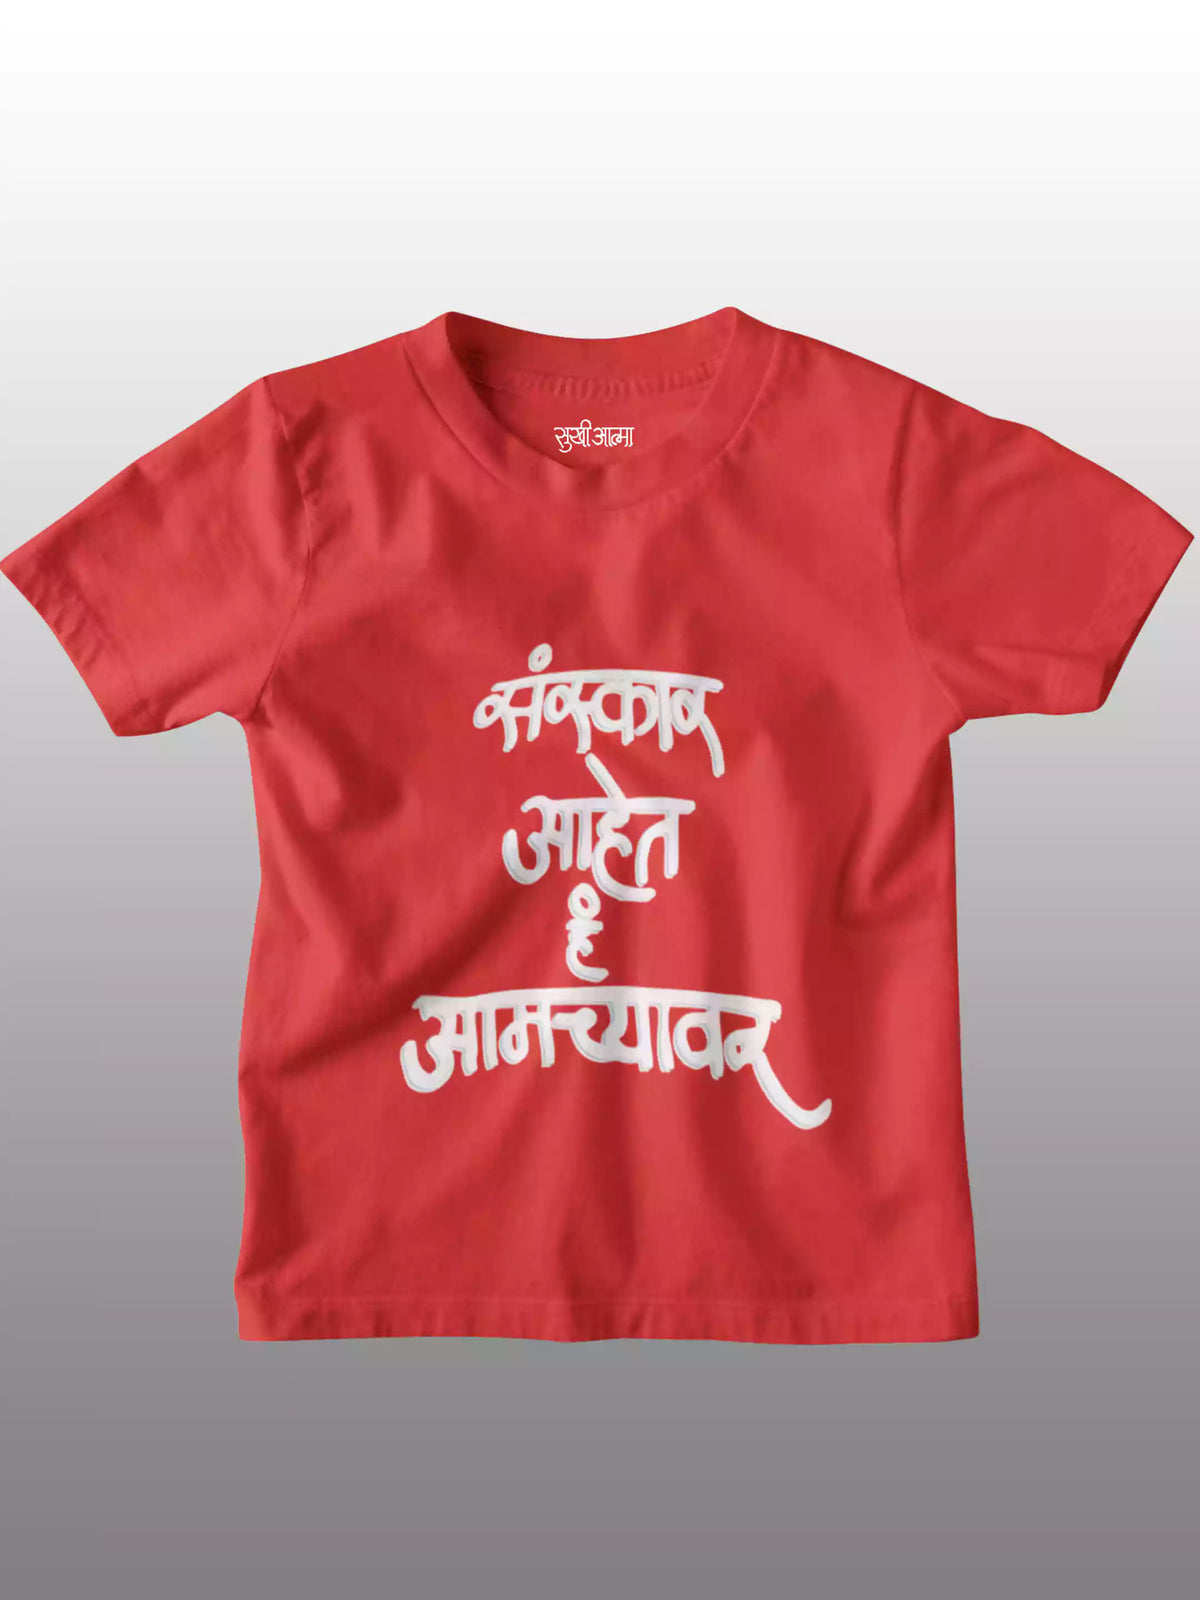 Sanskar aahet - Sukhiaatma Unisex Graphic Printed Kids T-shirt